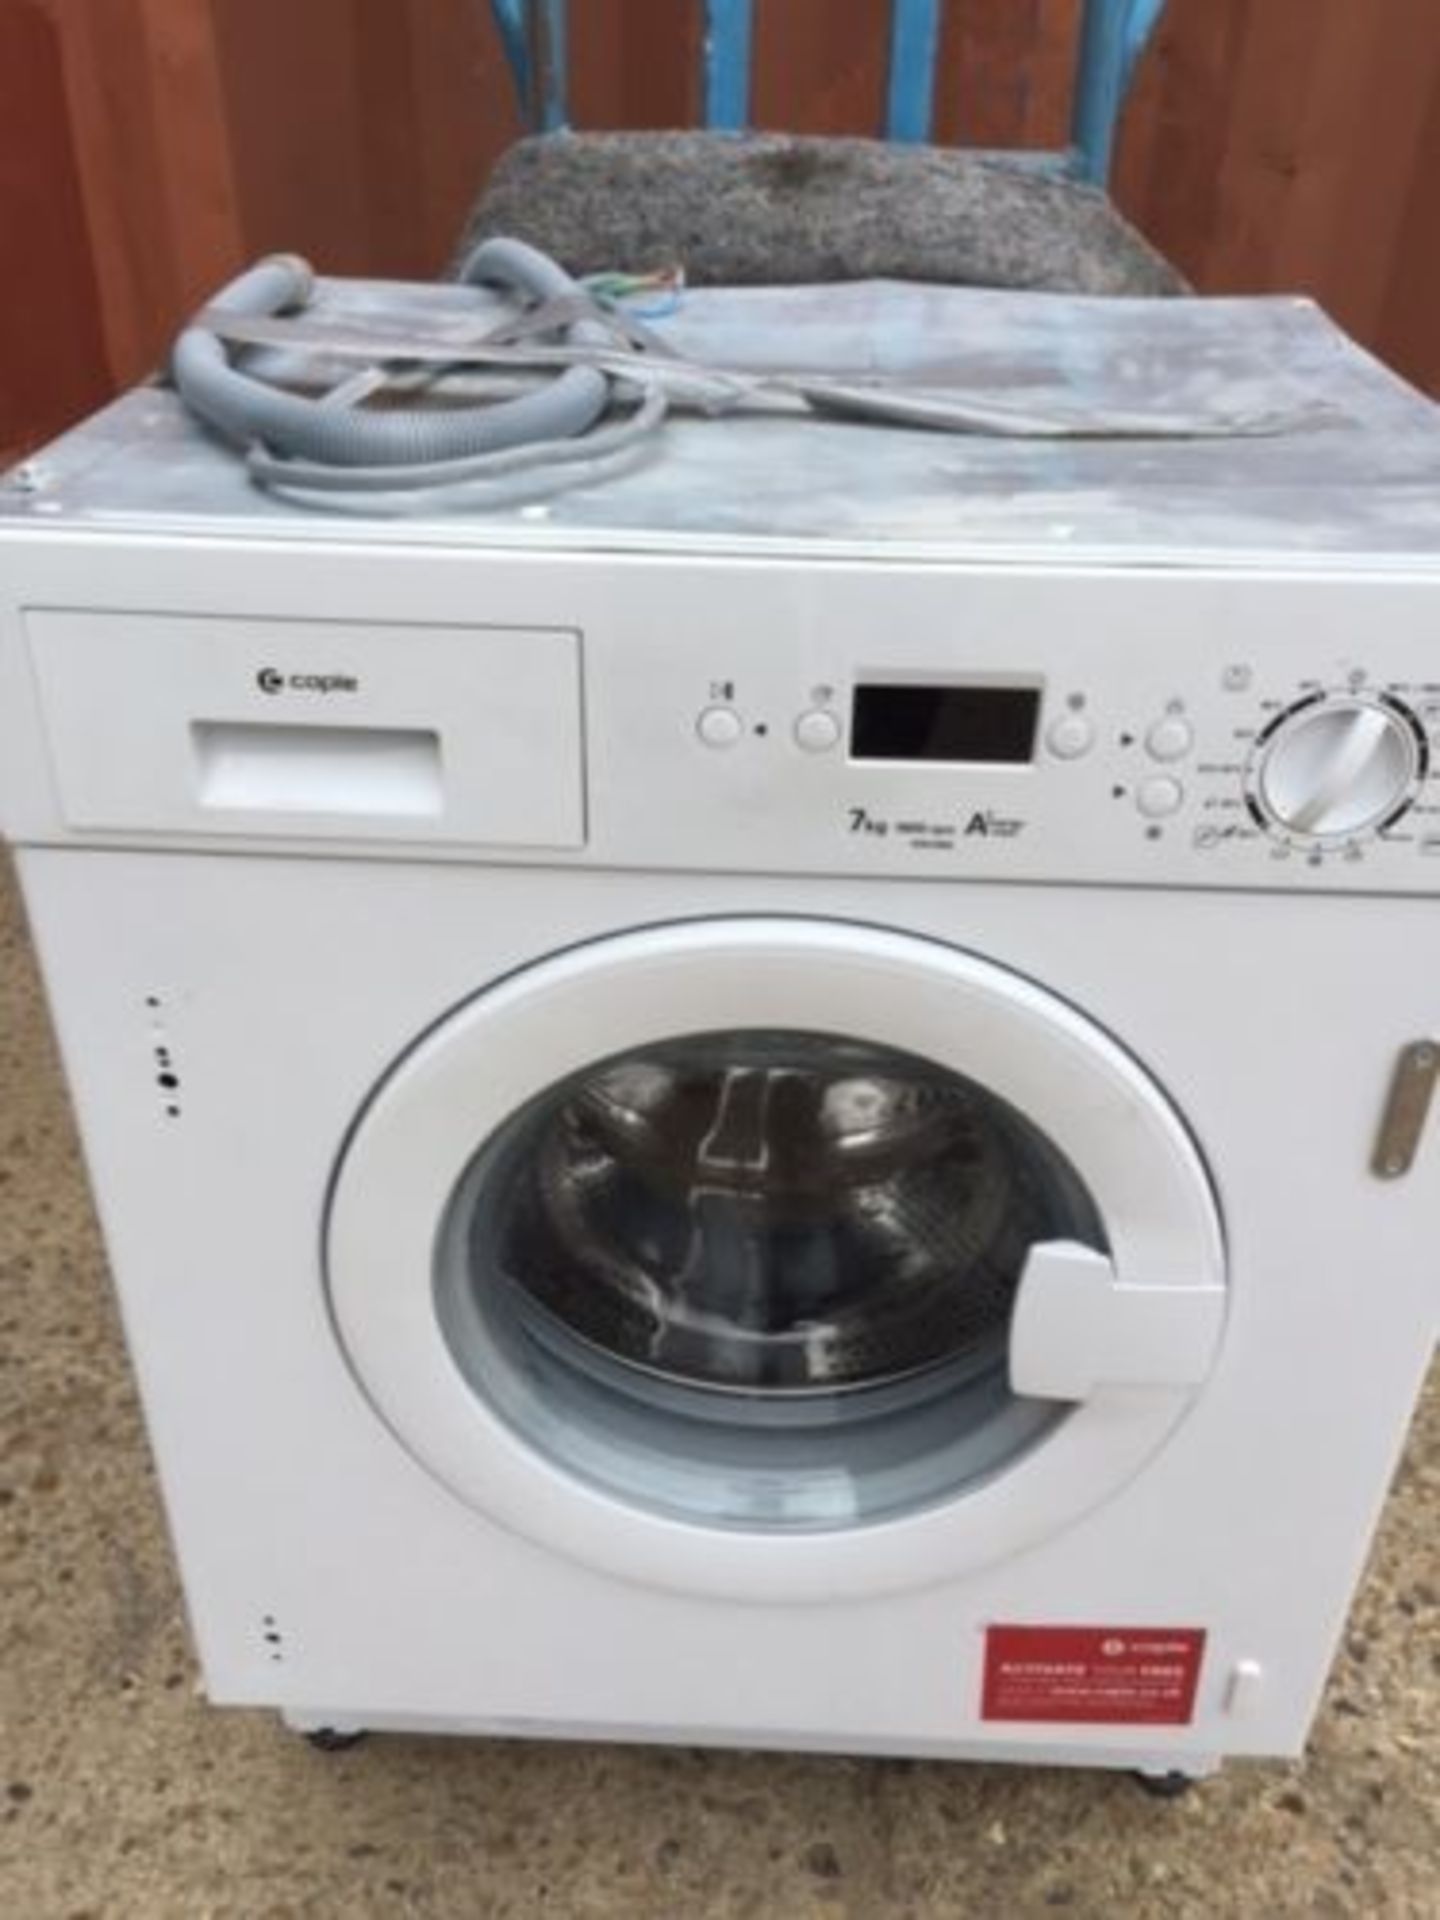 Caple WMI 2006 Electronic Integrated Washing Machine, New Ex Display, Full Working Order